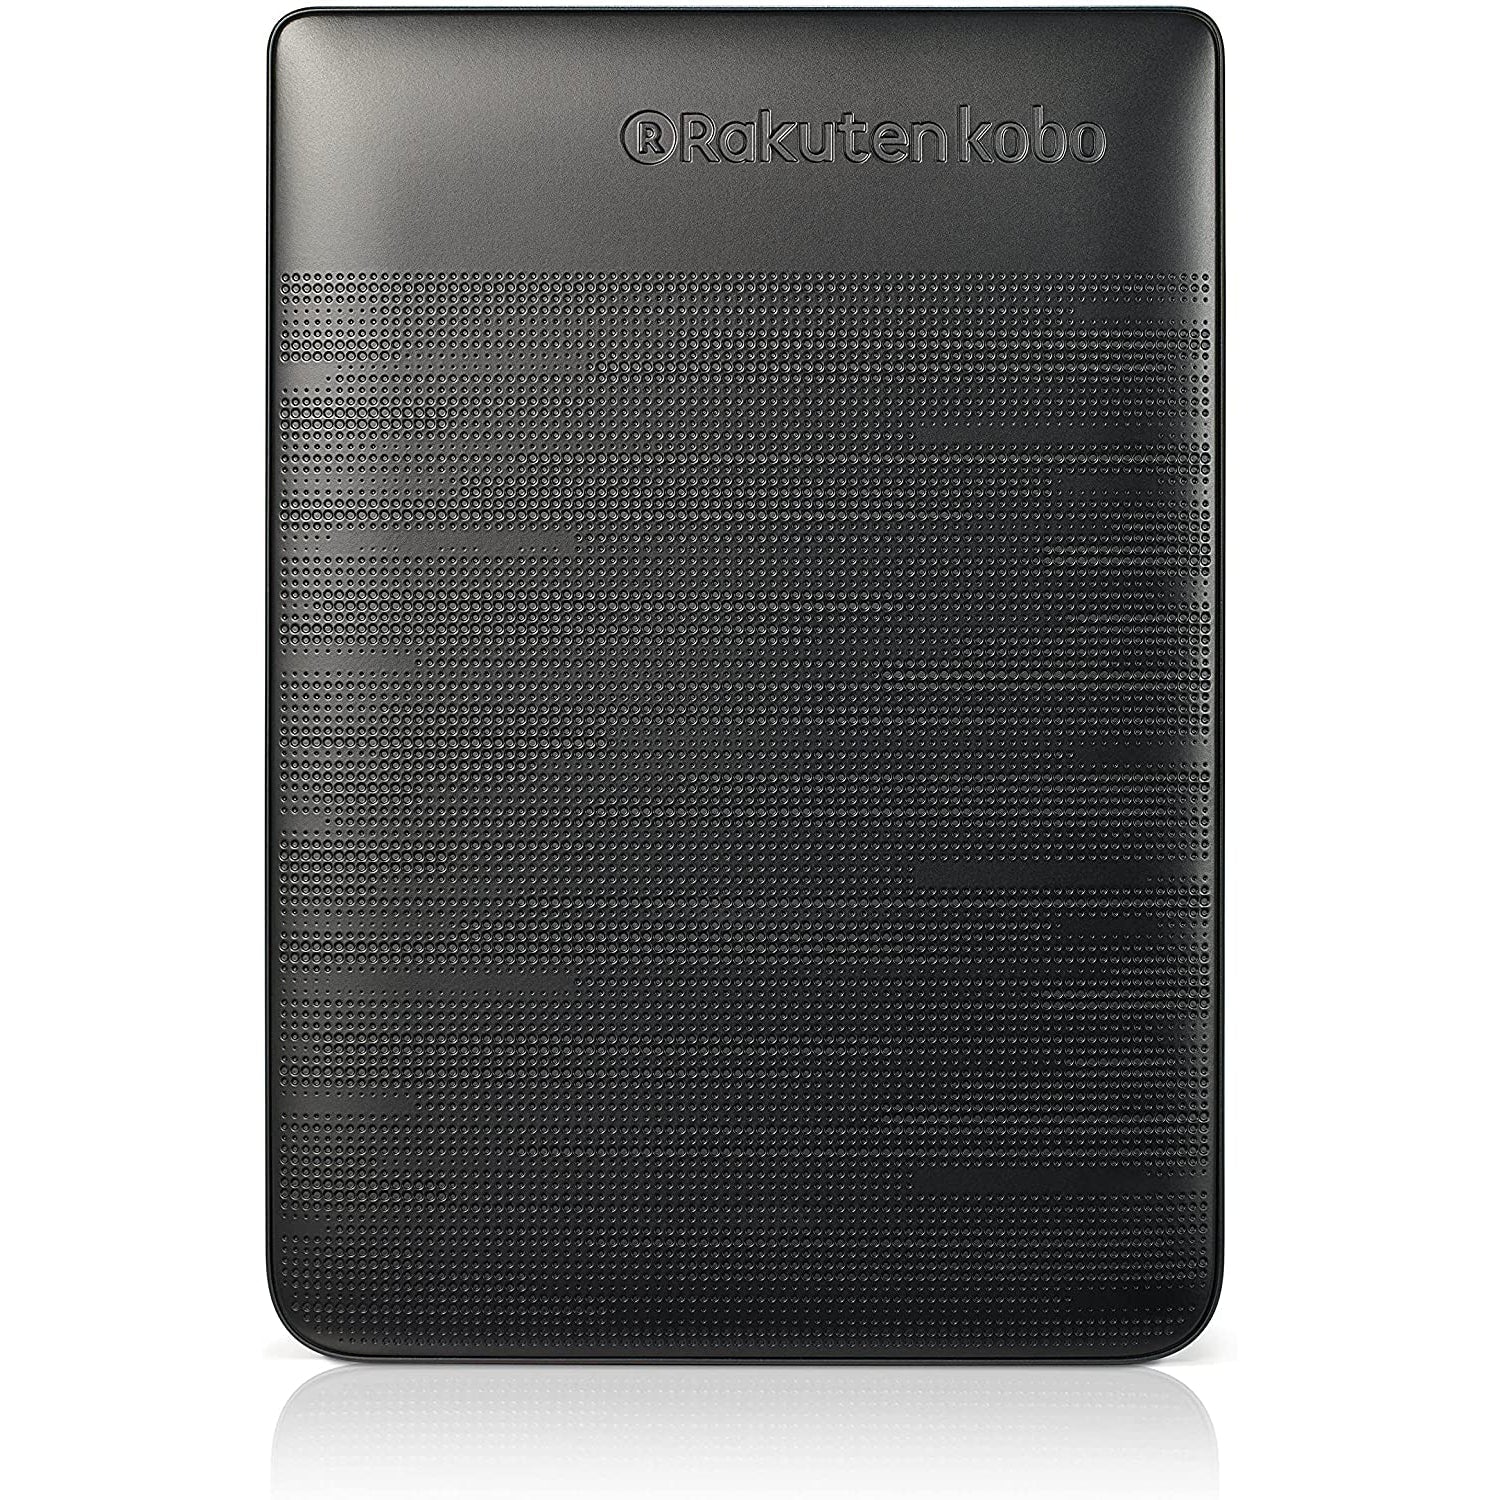 Kobo Clara HD eReader, 6" Illuminated Touch Screen, Wi-Fi, Black - Refurbished Excellent